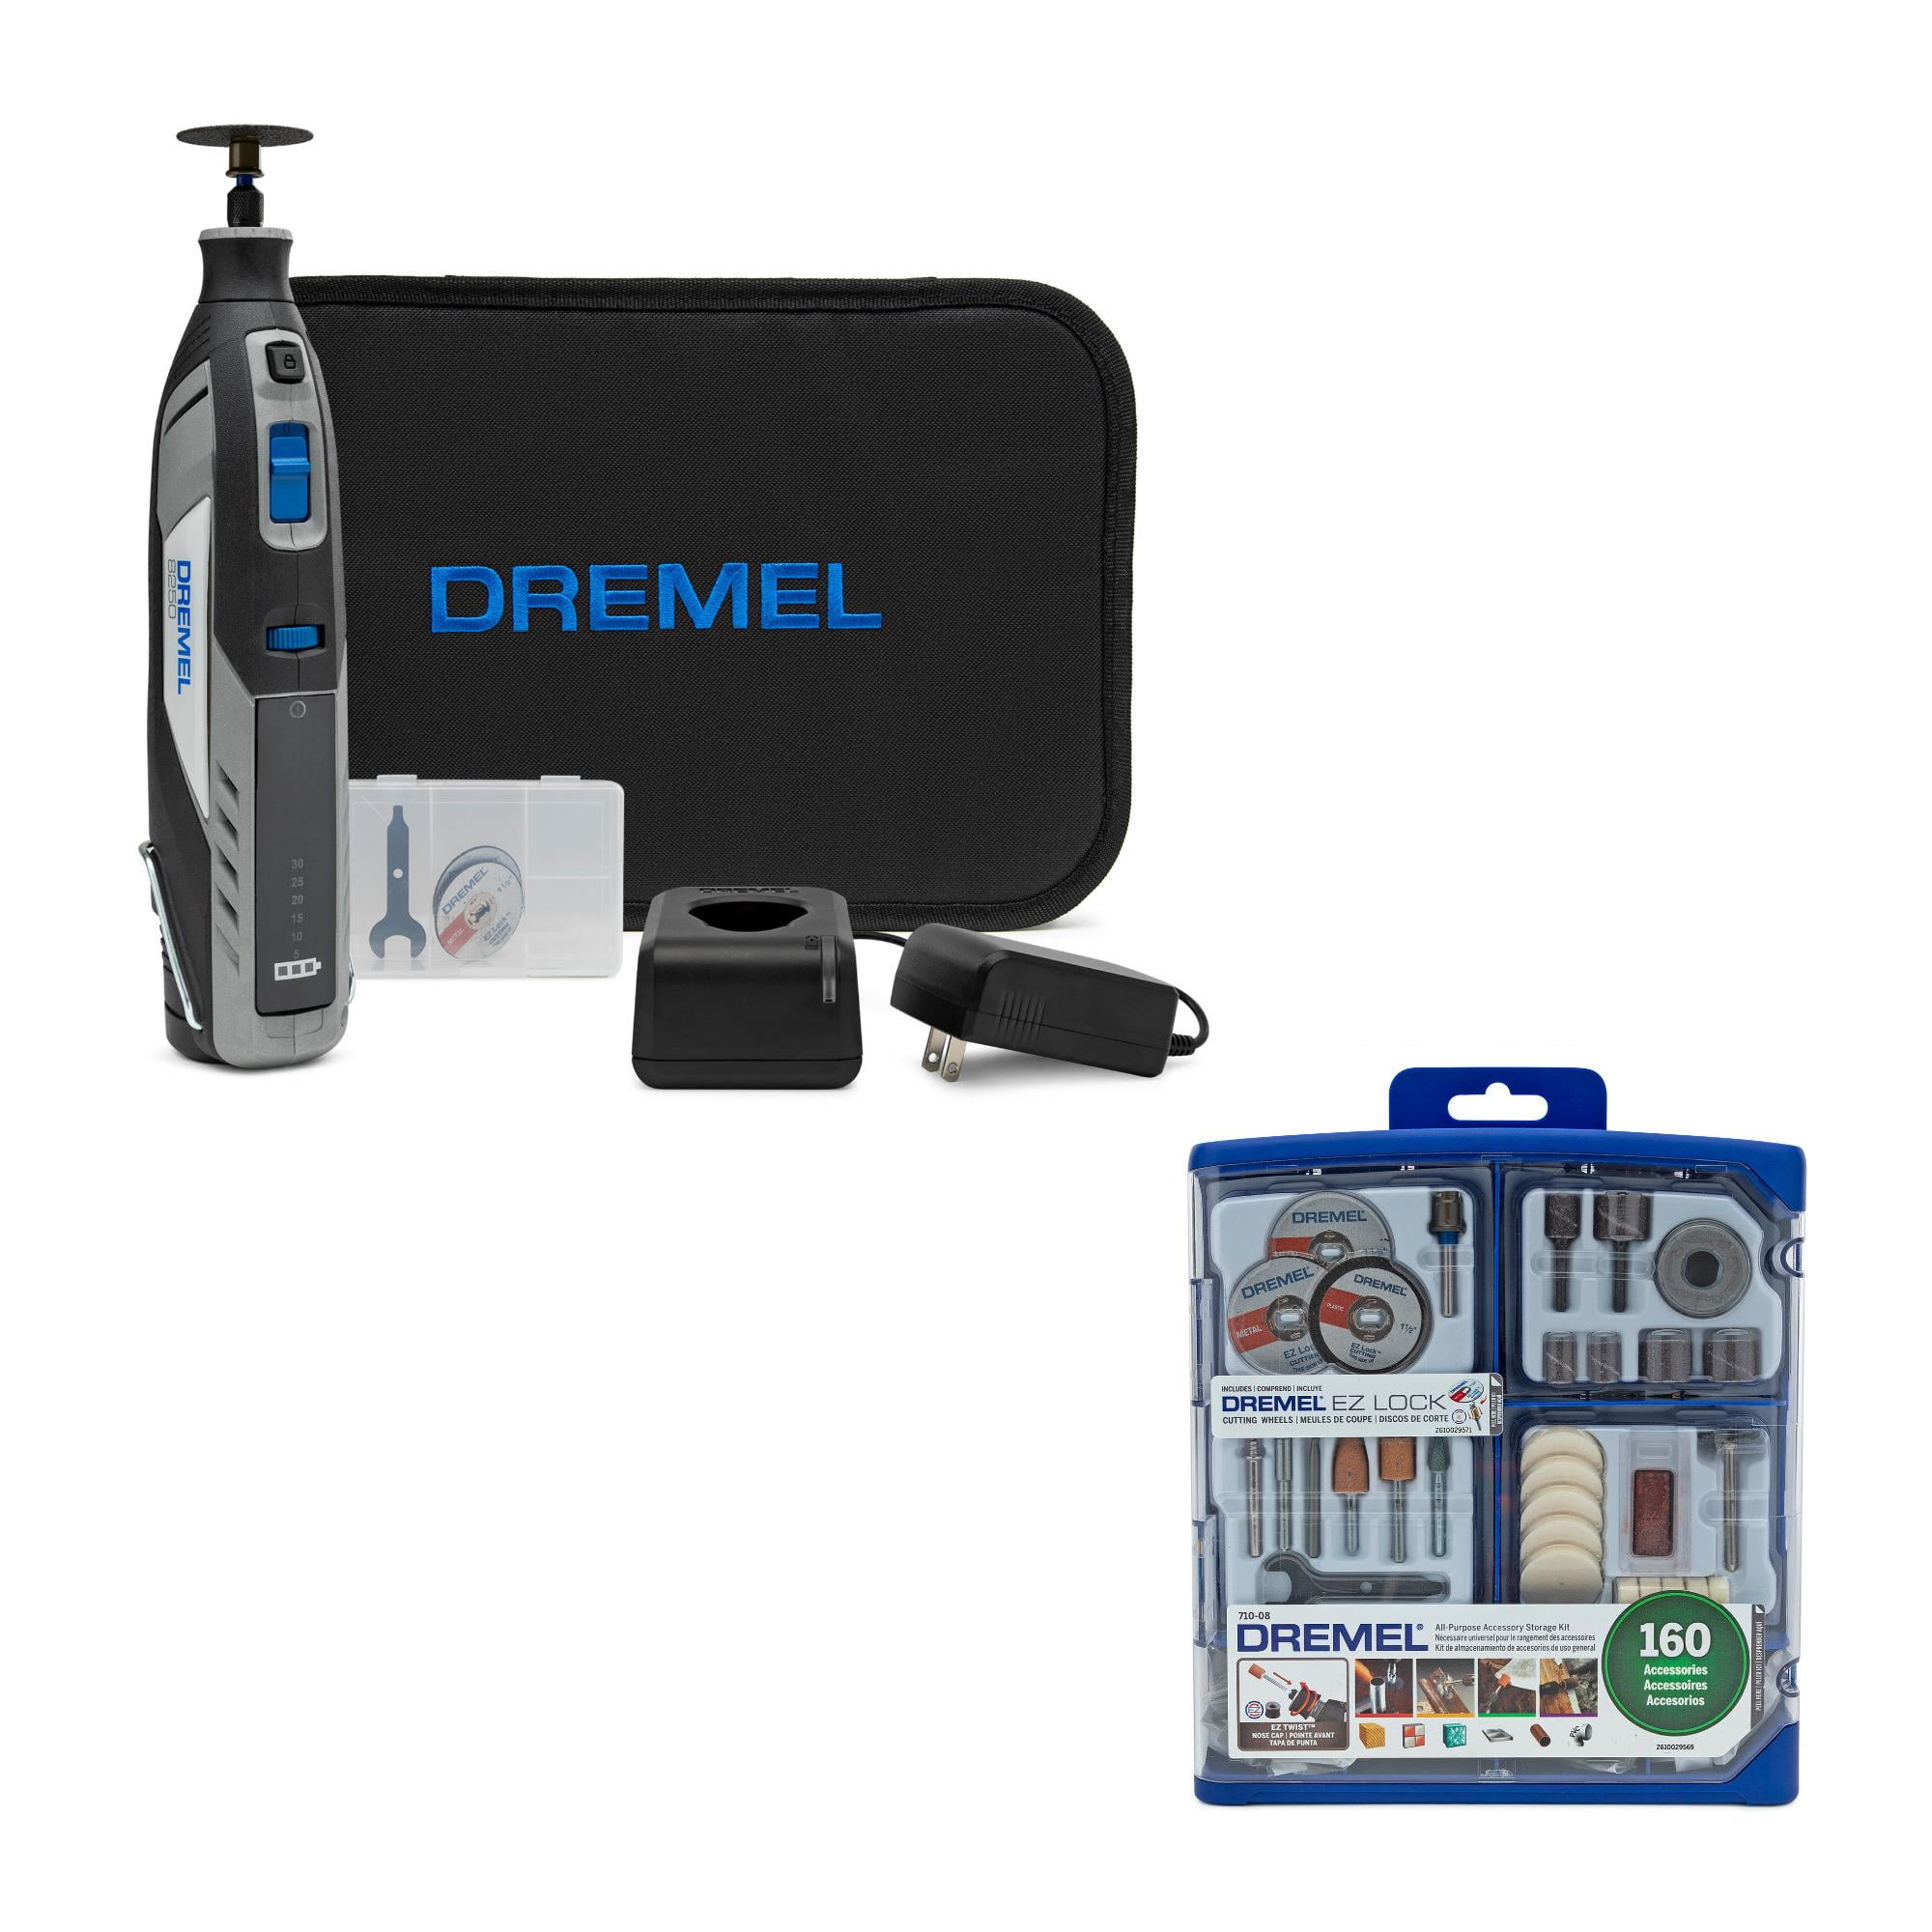 Dremel Cordless Brushless Rotary Tool 8250